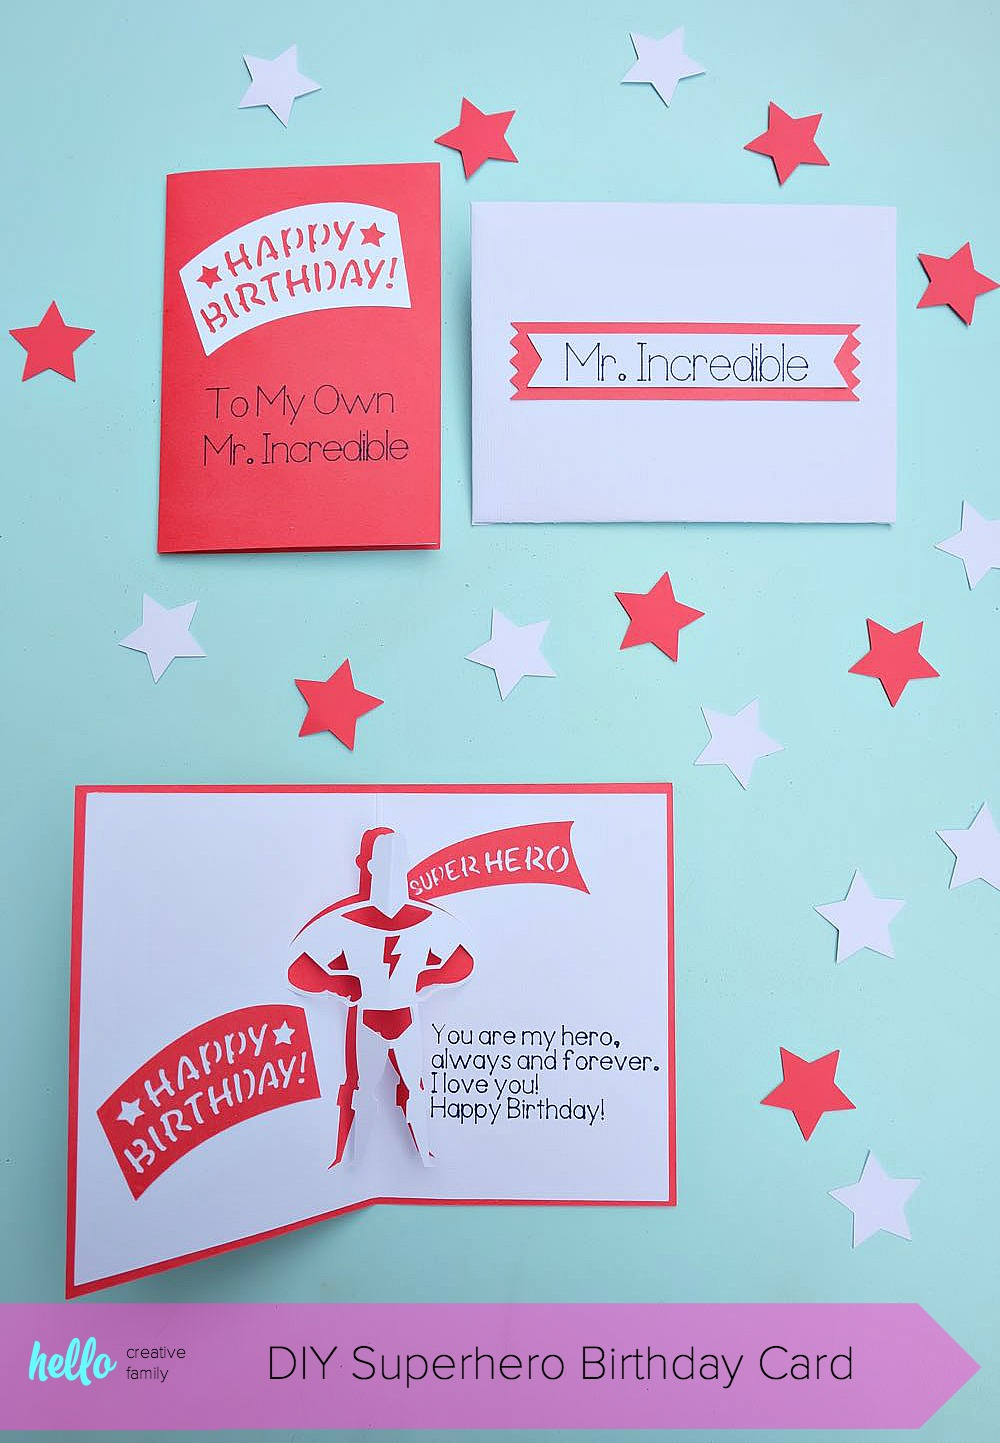 Cricut Birthday Card Ideas Diy Superhero Birthday Card And Envelope Set Hello Creative Family